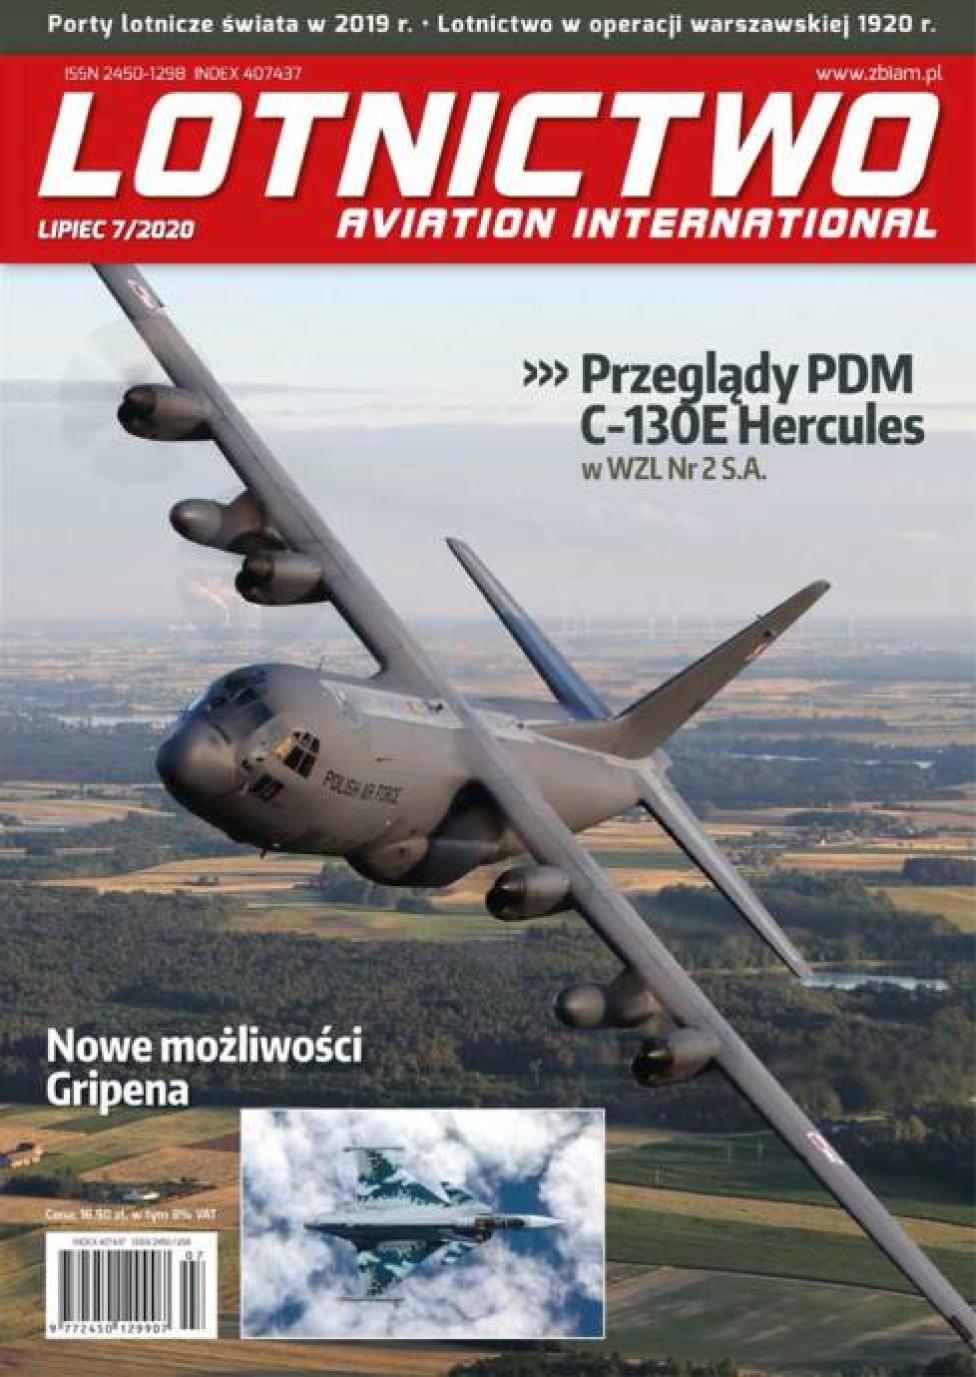 Lotnictwo Aviation International 7/2020